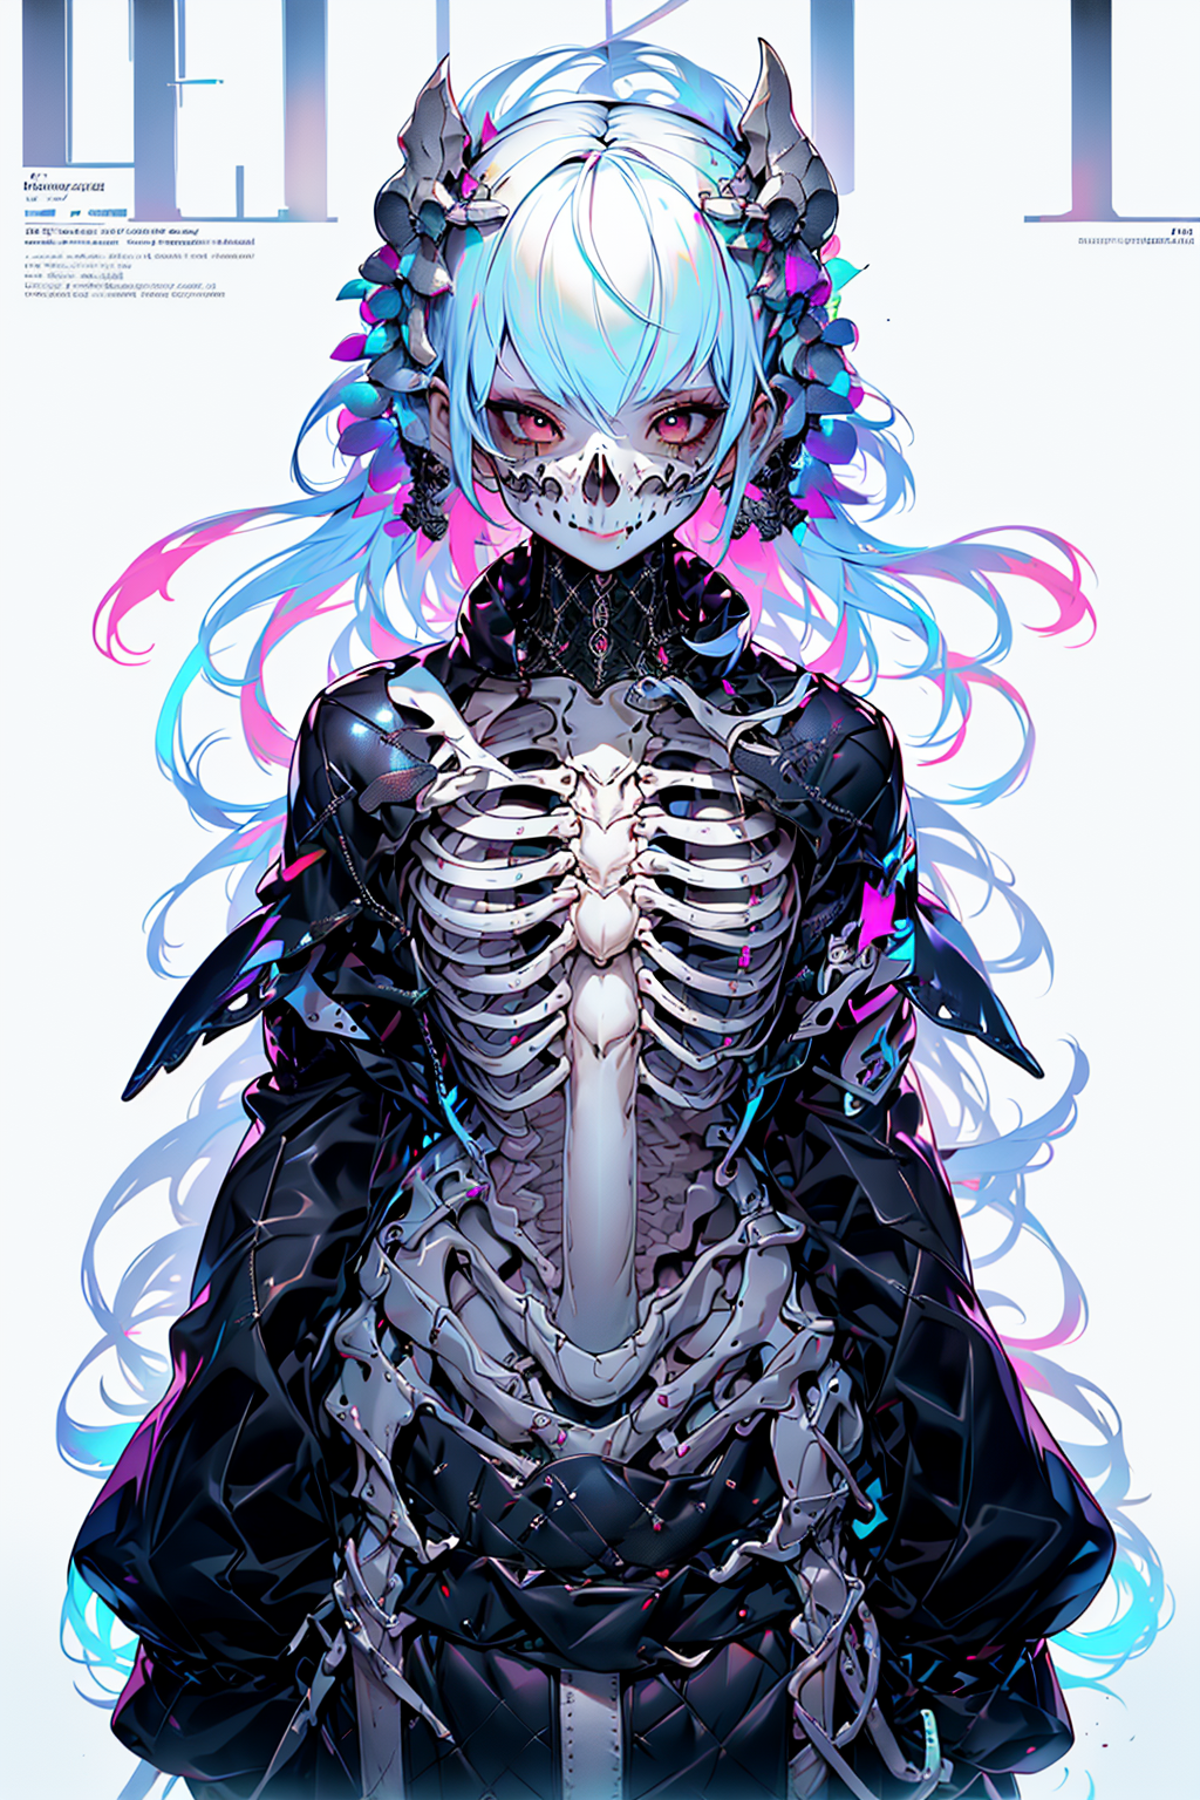 Skeleton image by KoRo_